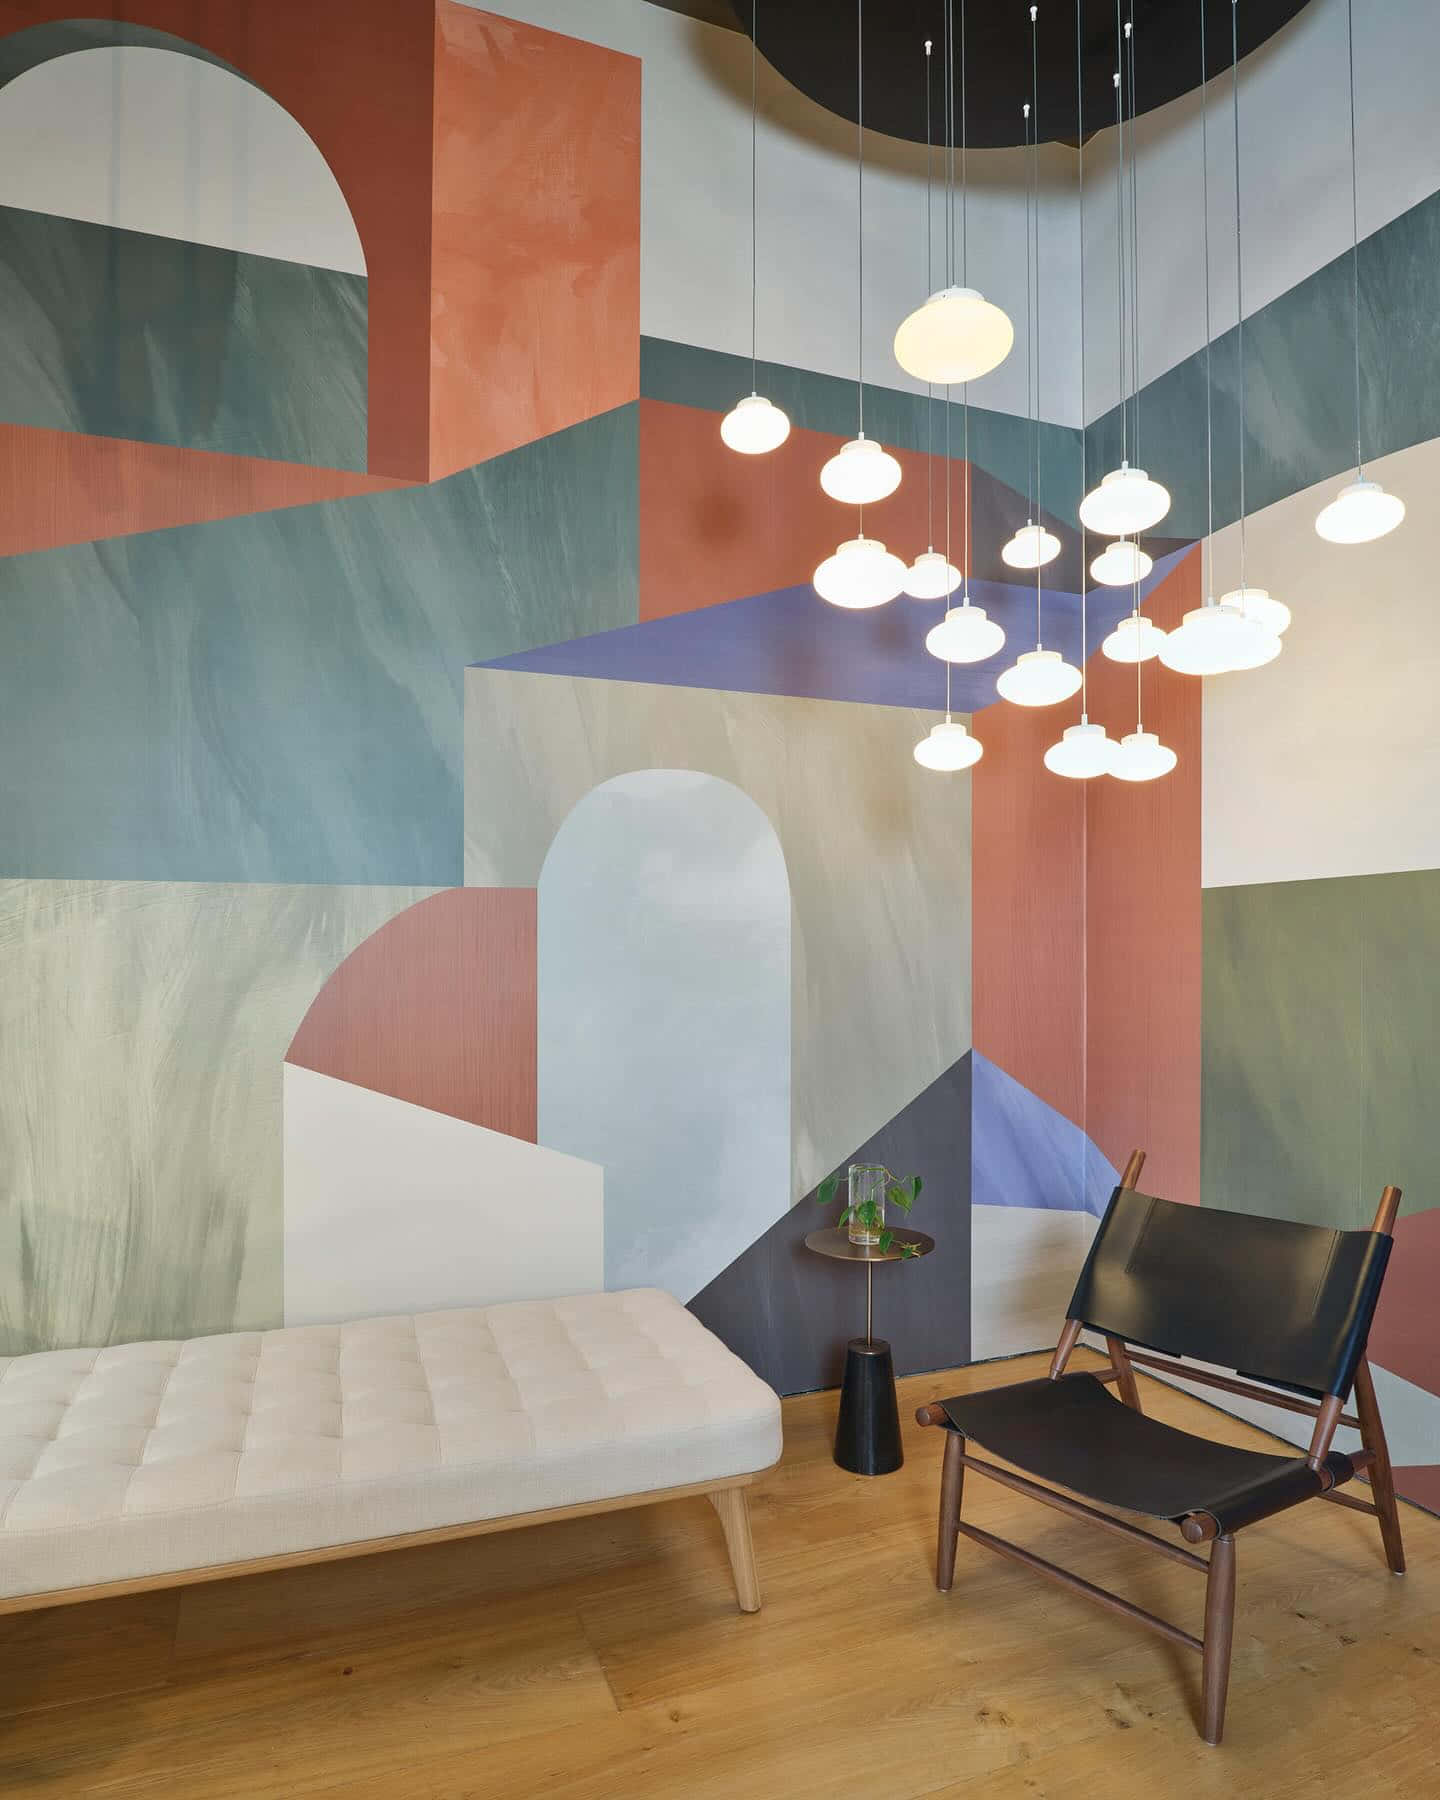 Abstract Mural Interior Design.jpg Wallpaper